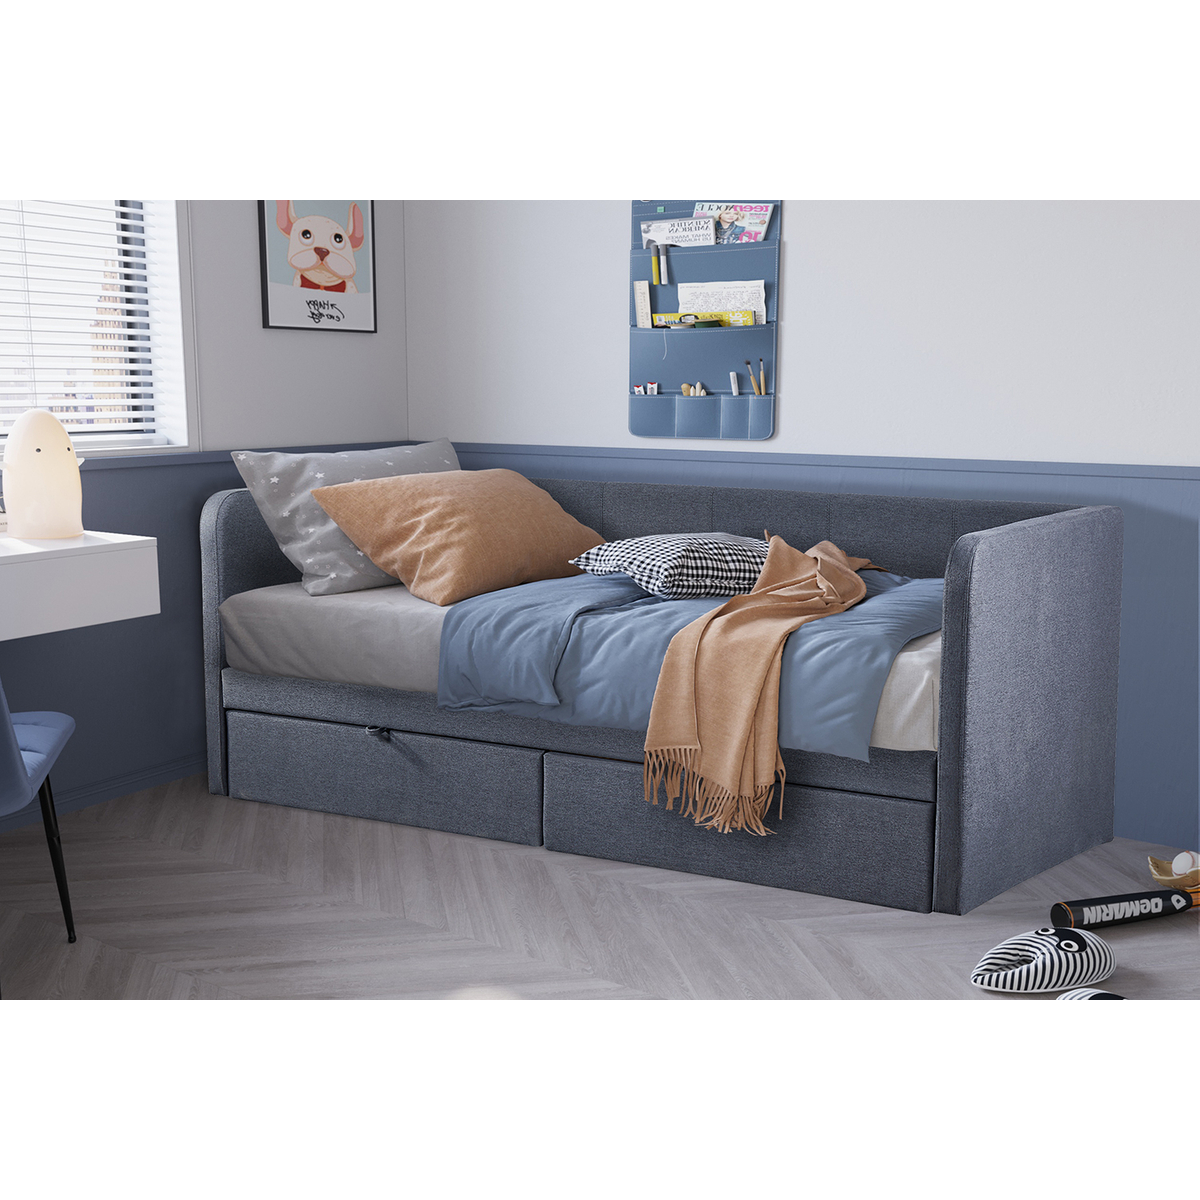 Interiax Liam Bed - Comfort Inclusief 2 schuiven en lattenbodem (90 x 200 cm)